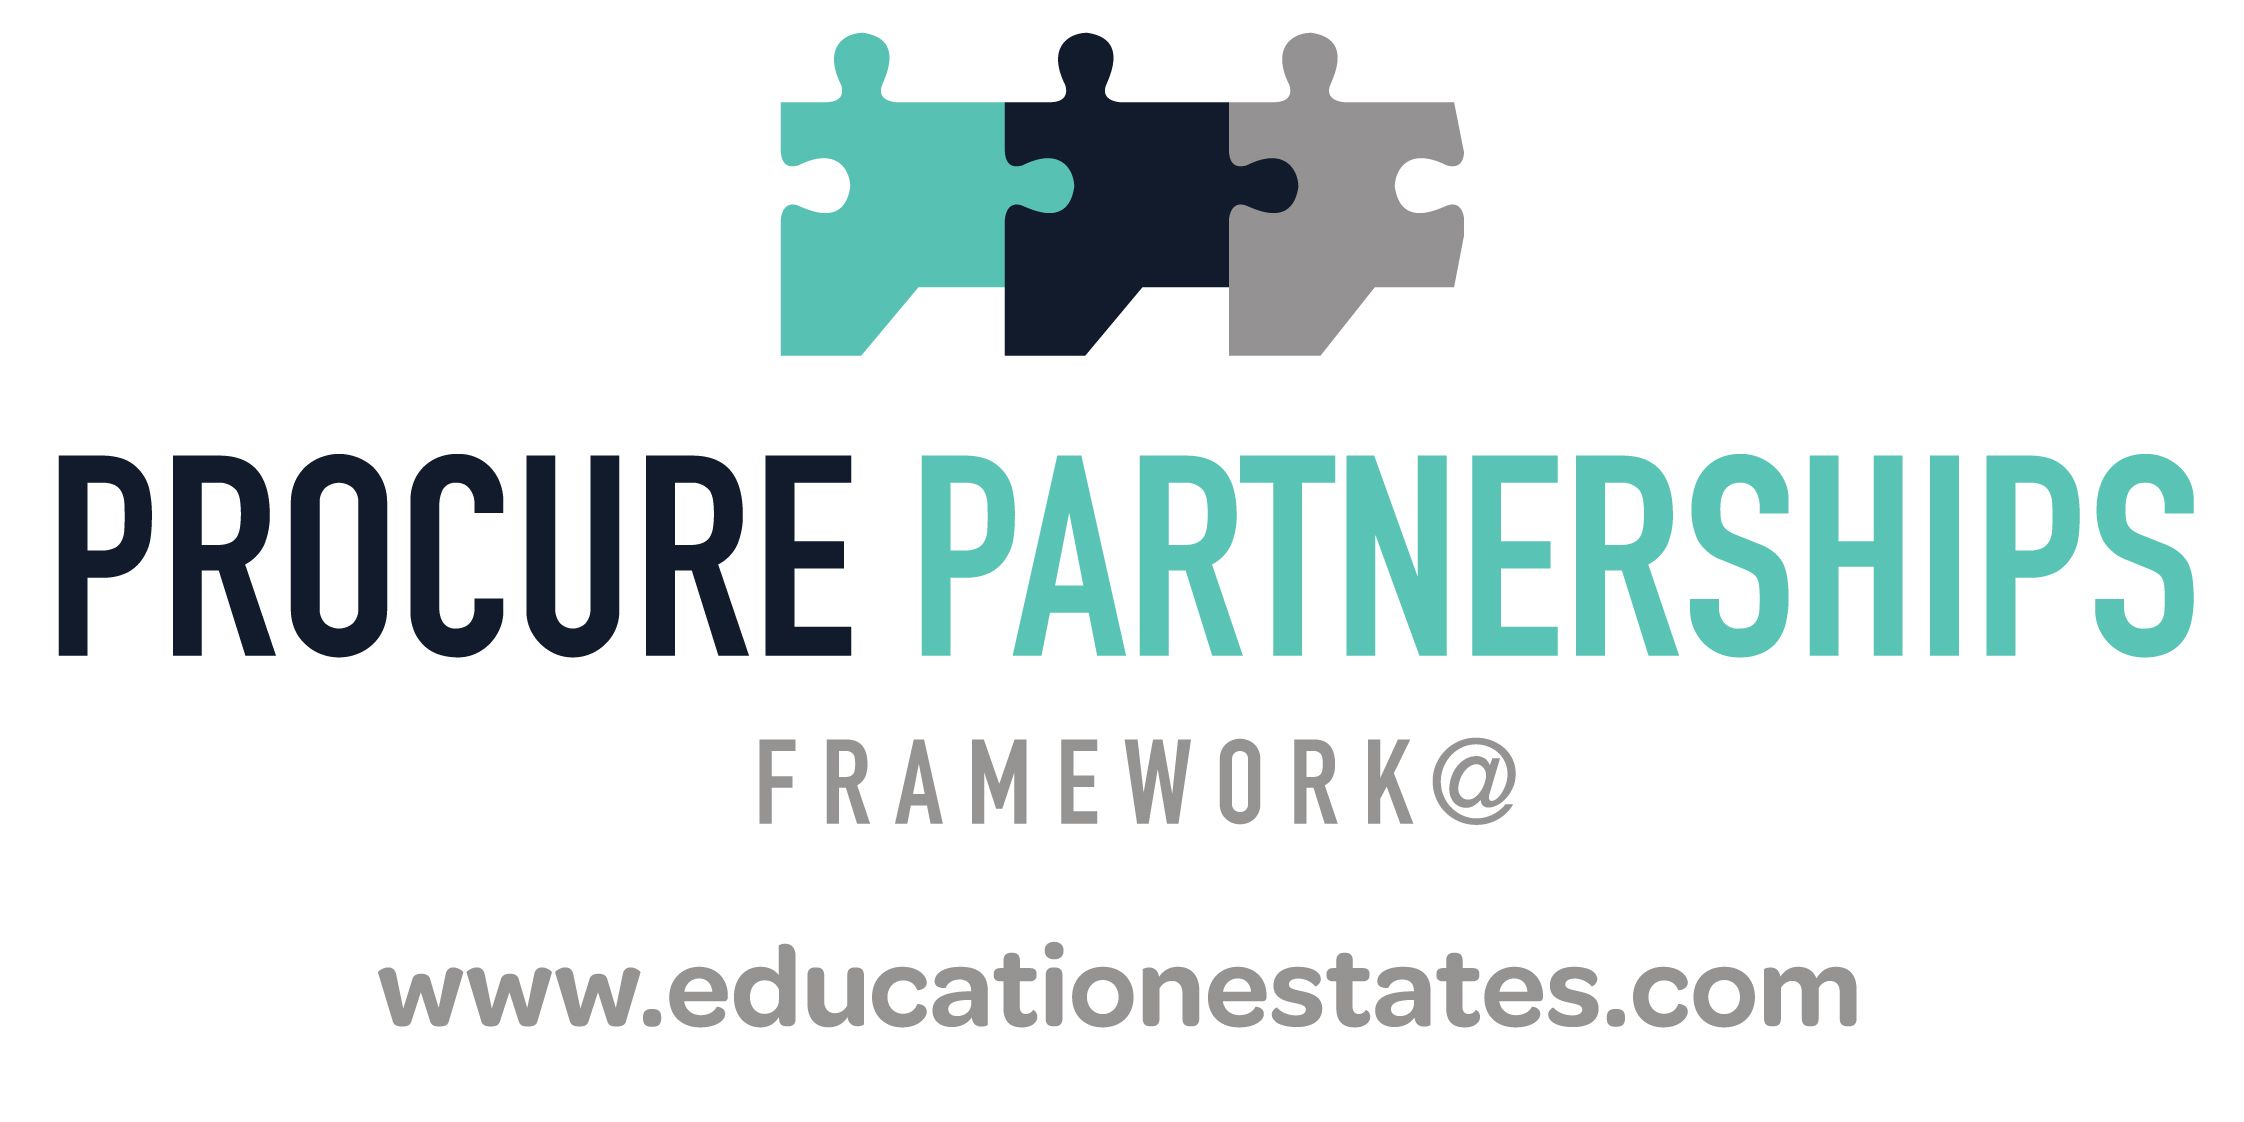 Procure Partnership Frameworks